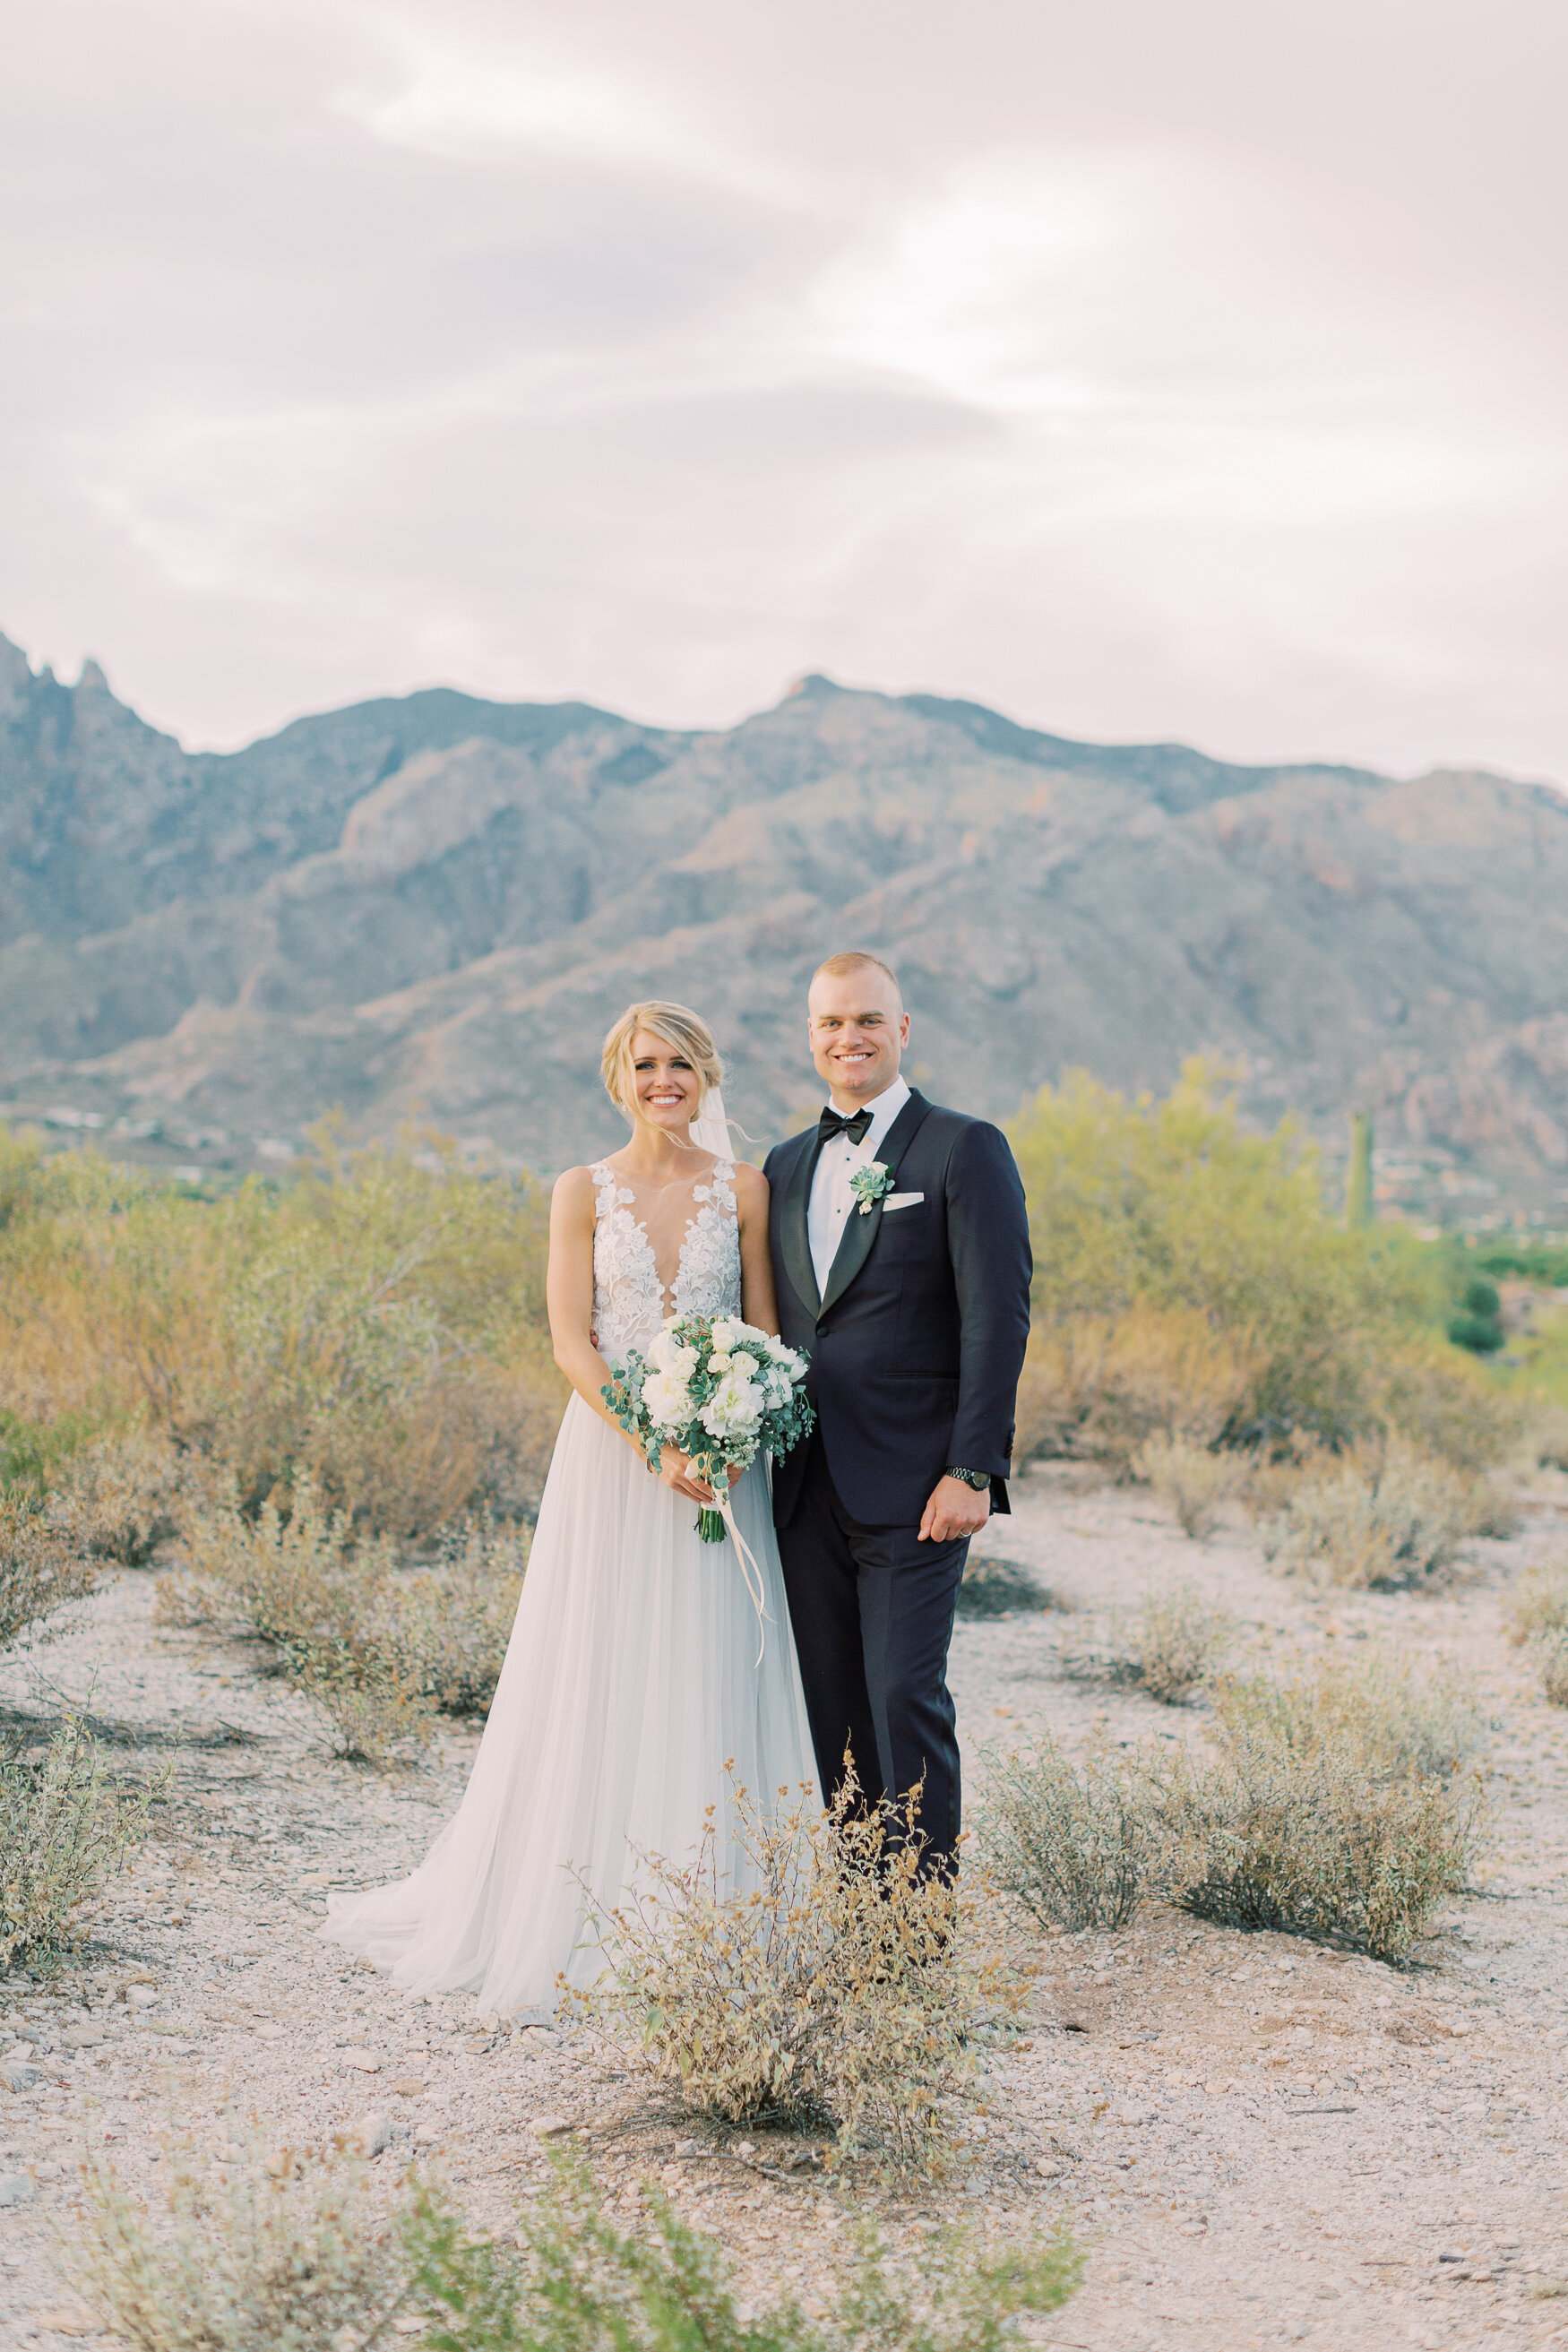 tucson-arizona-desert-wedding-6.jpg